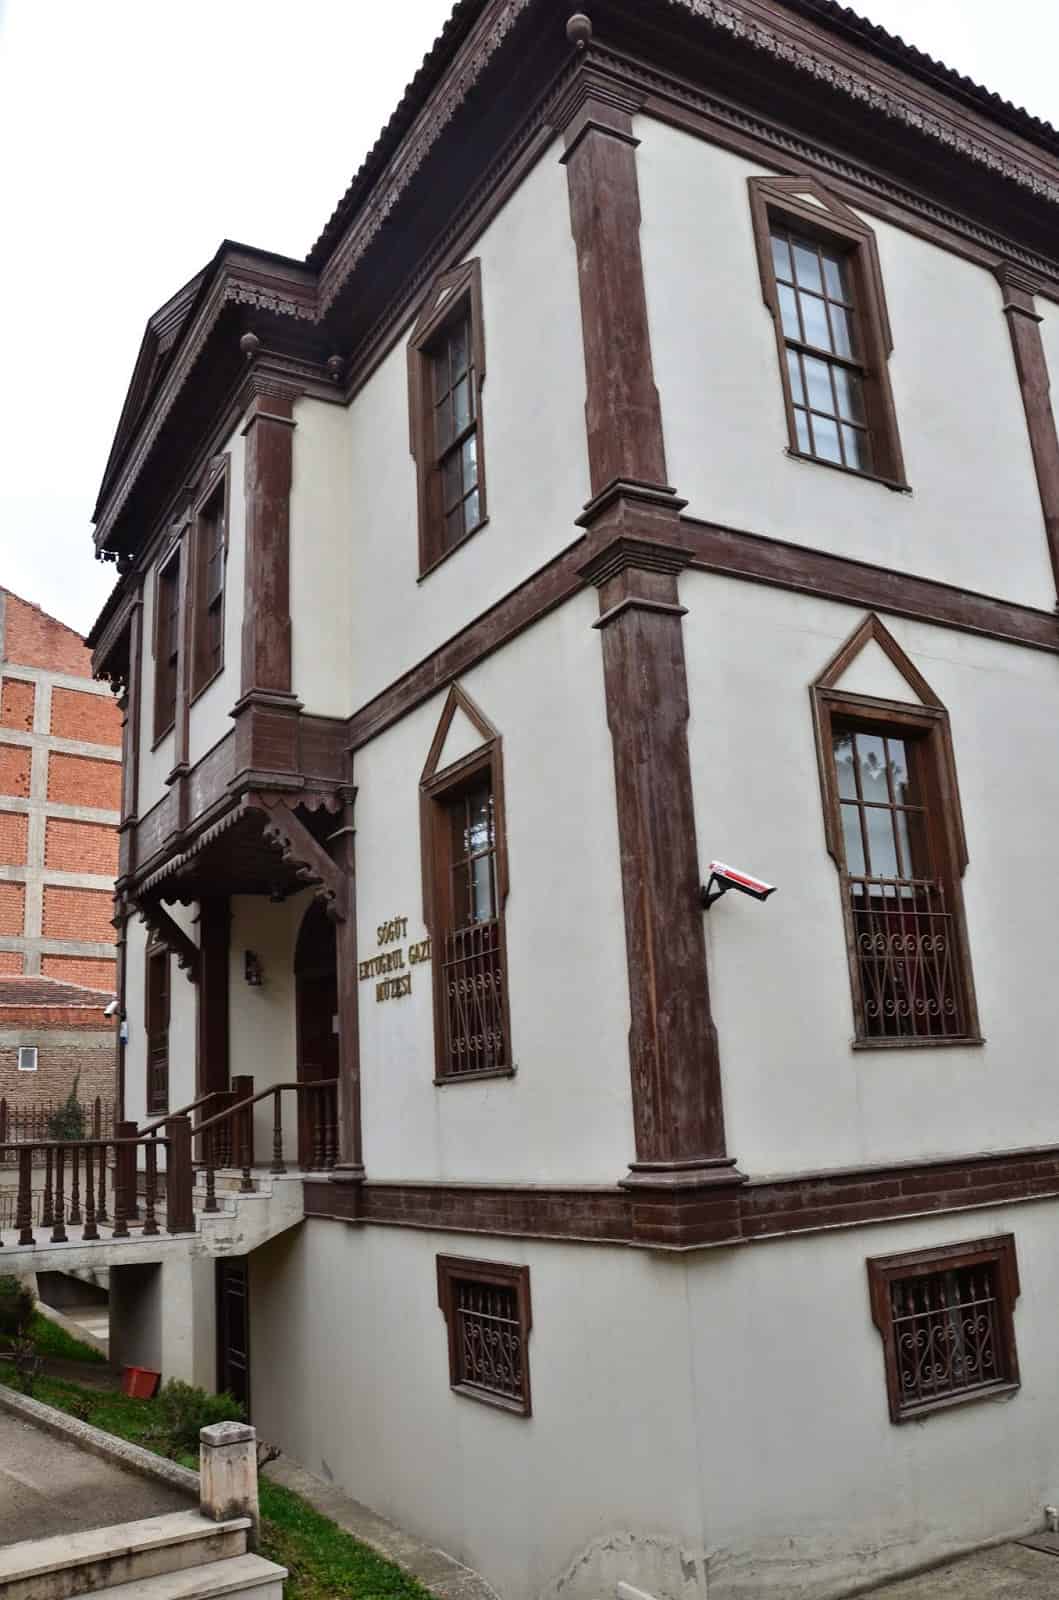 Ethnographic Museum in Söğüt, Turkey